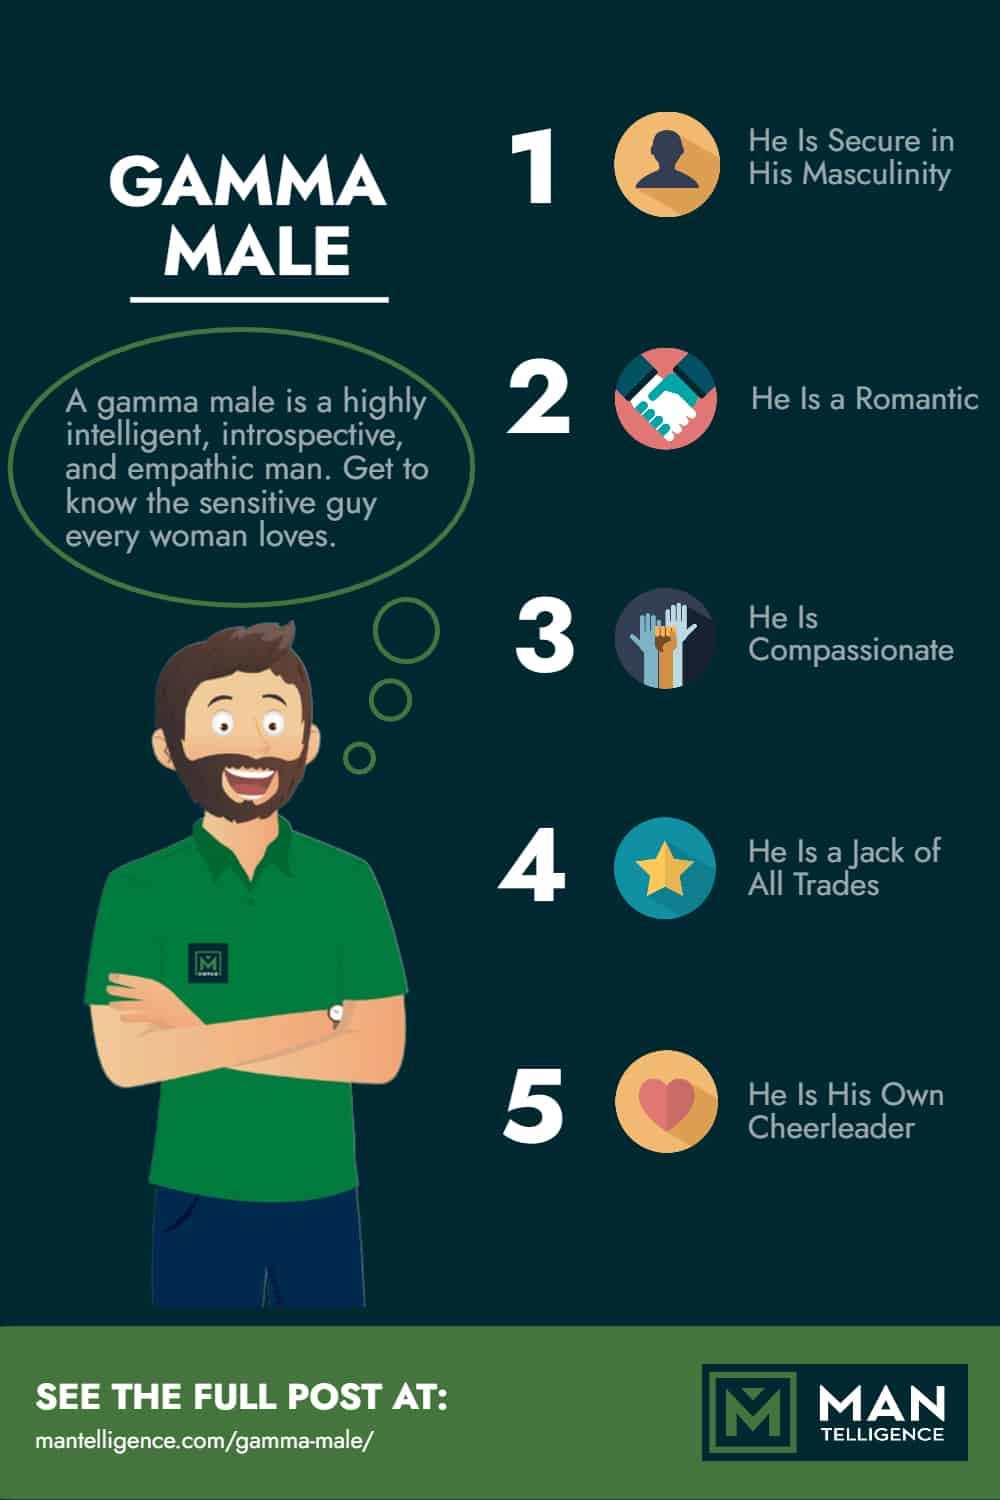 Male personality